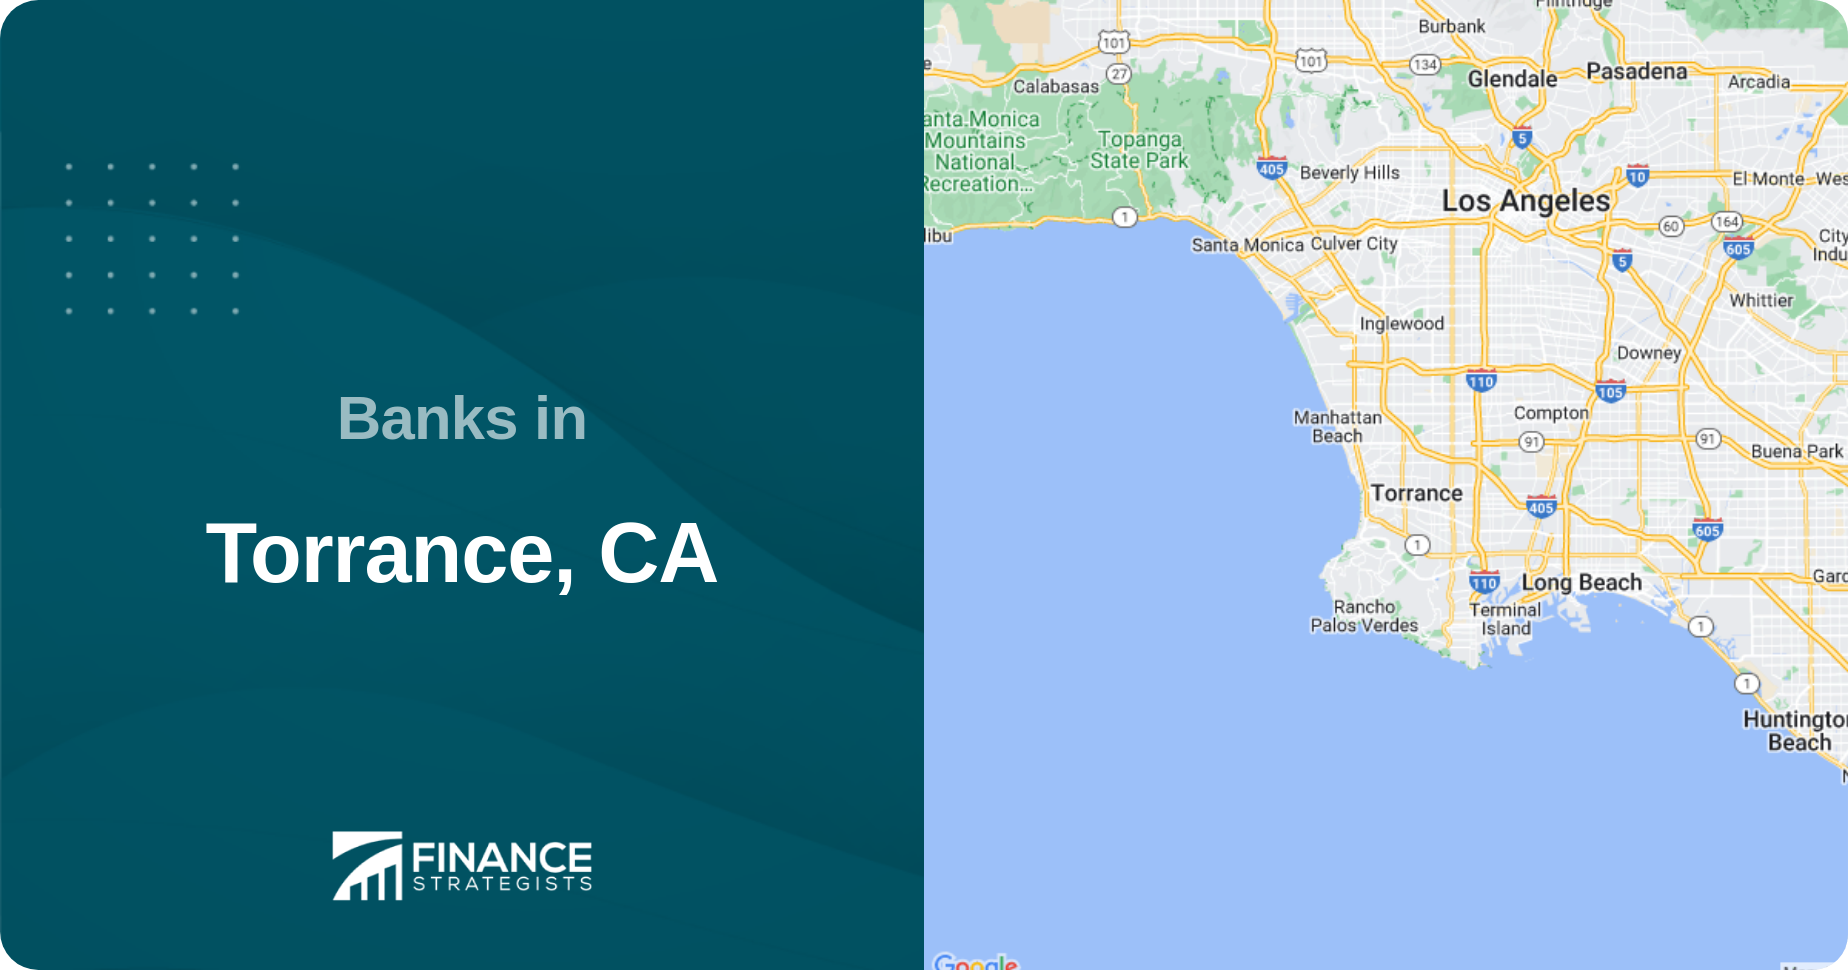 Banks in Torrance, CA